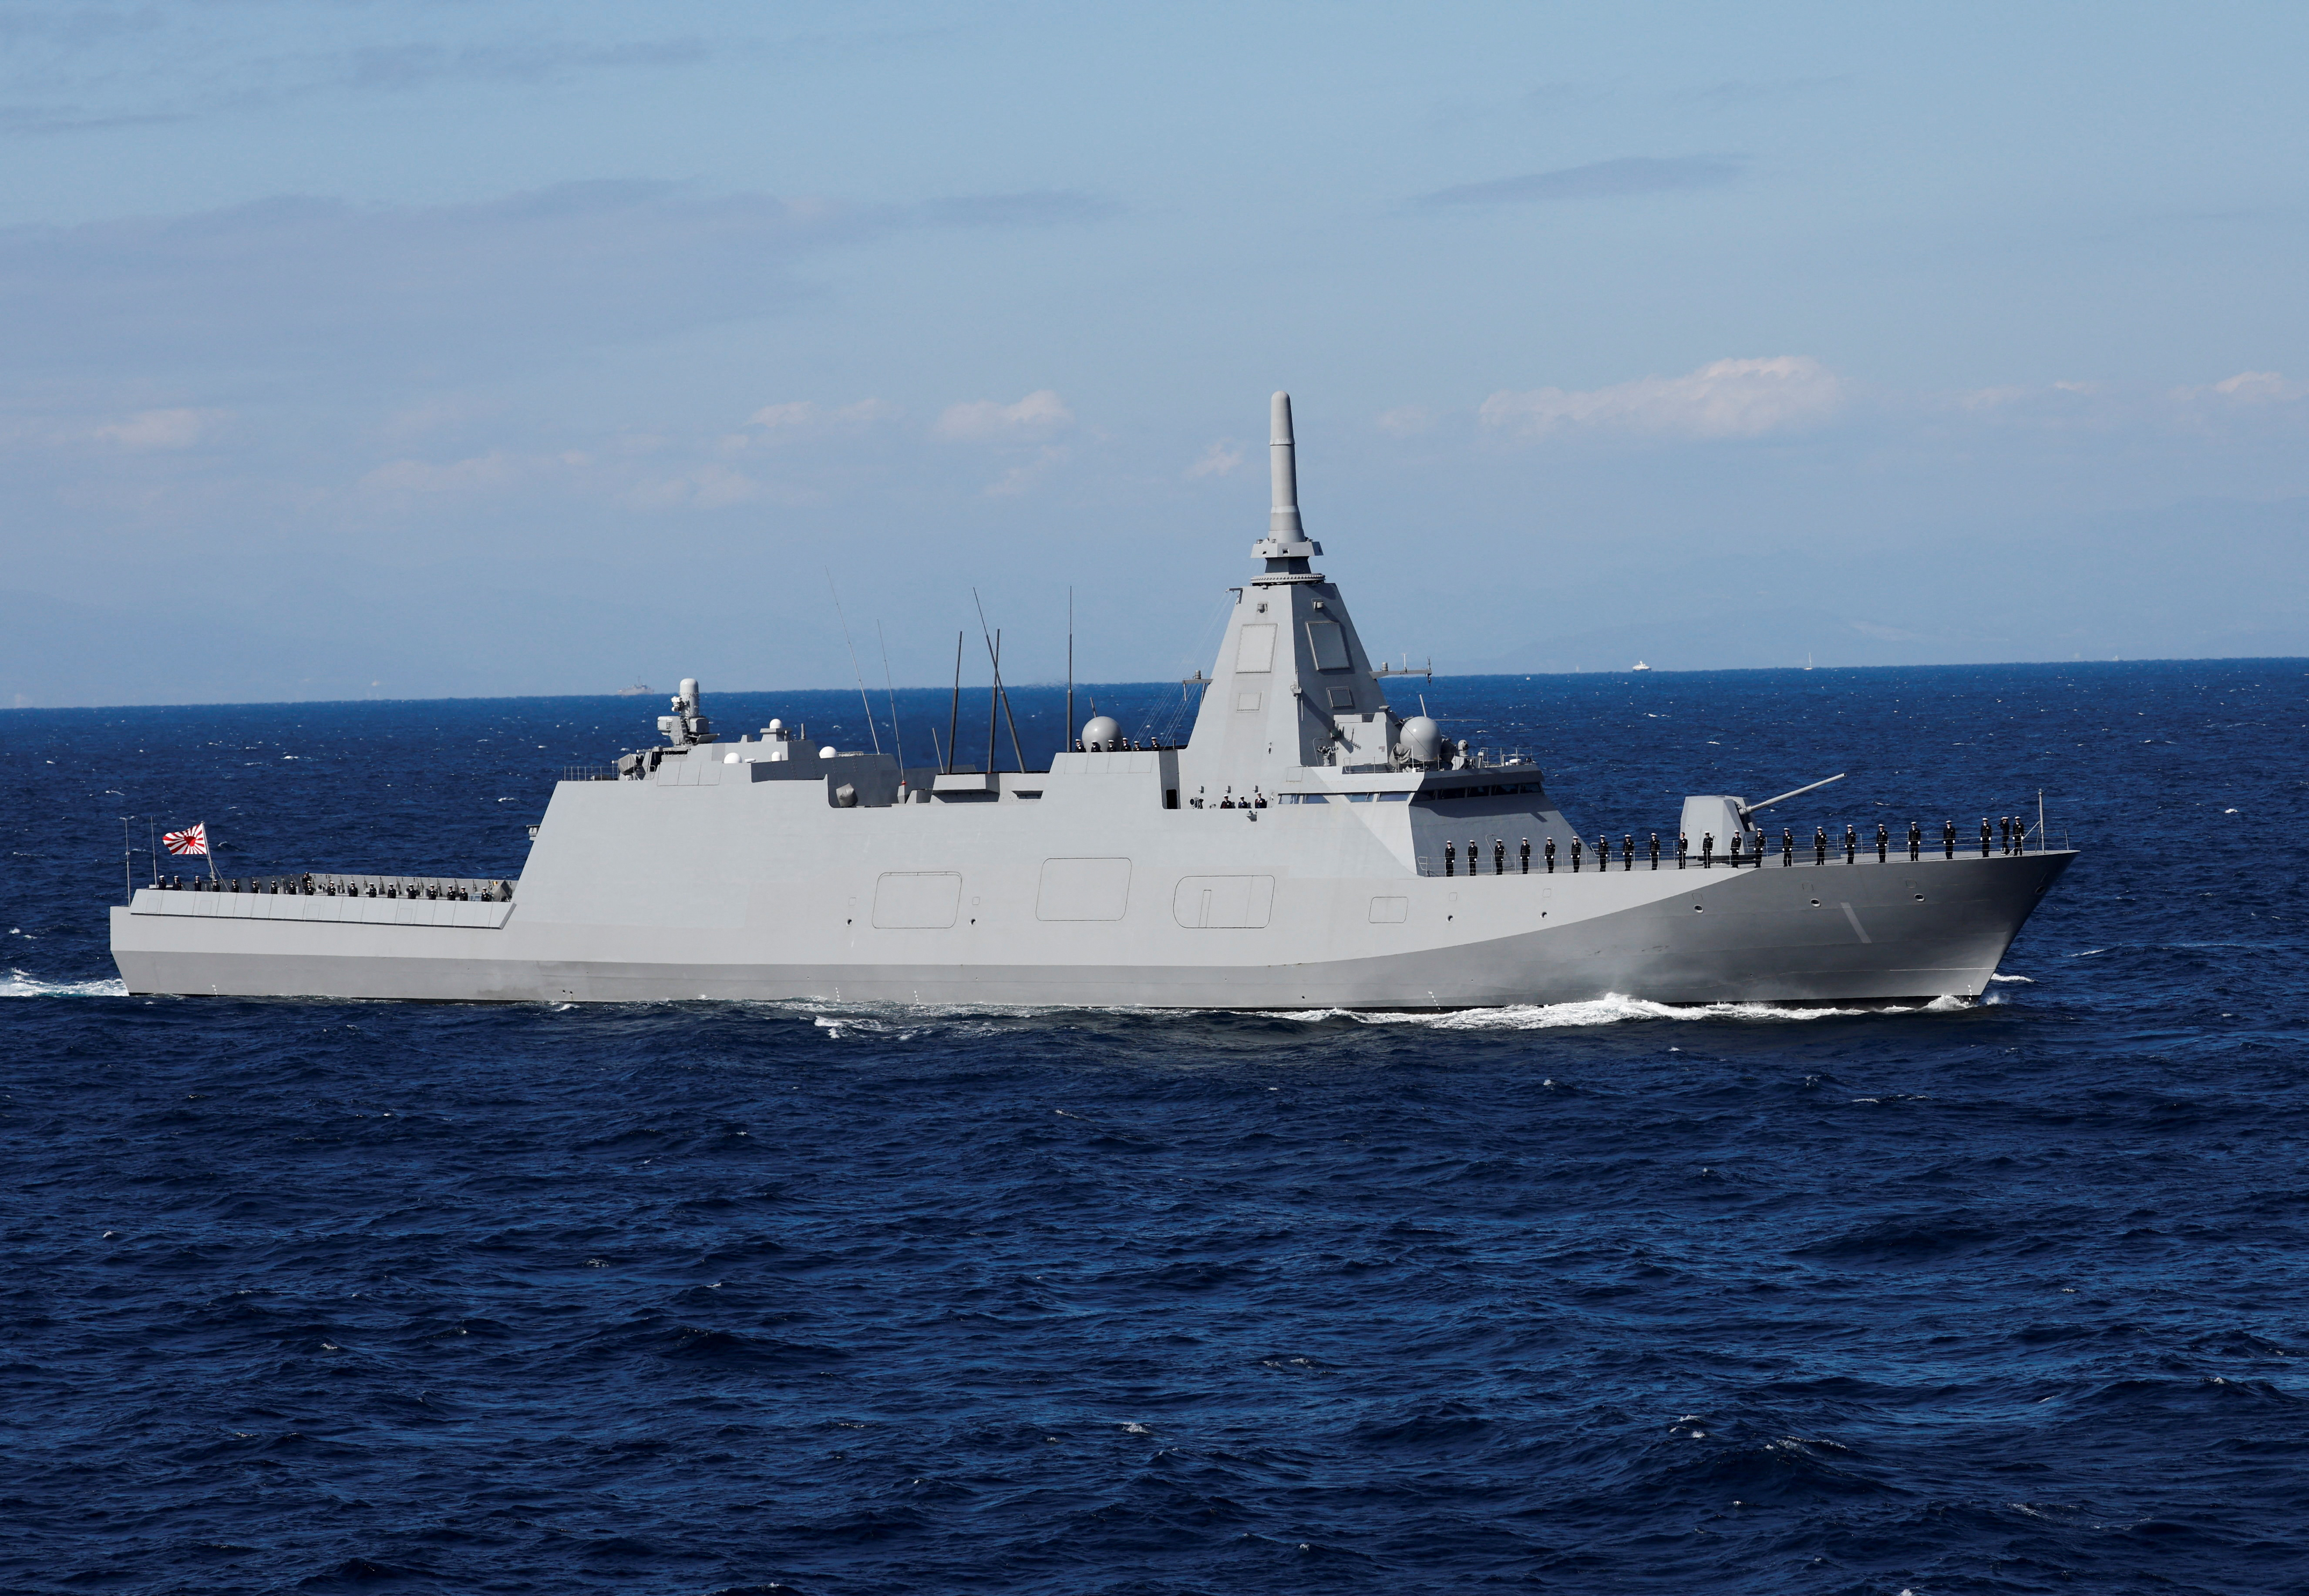 Japan's Maritime Self-Defense Force's JS Mogami takes part in International Fleet Review at Sagami Bay